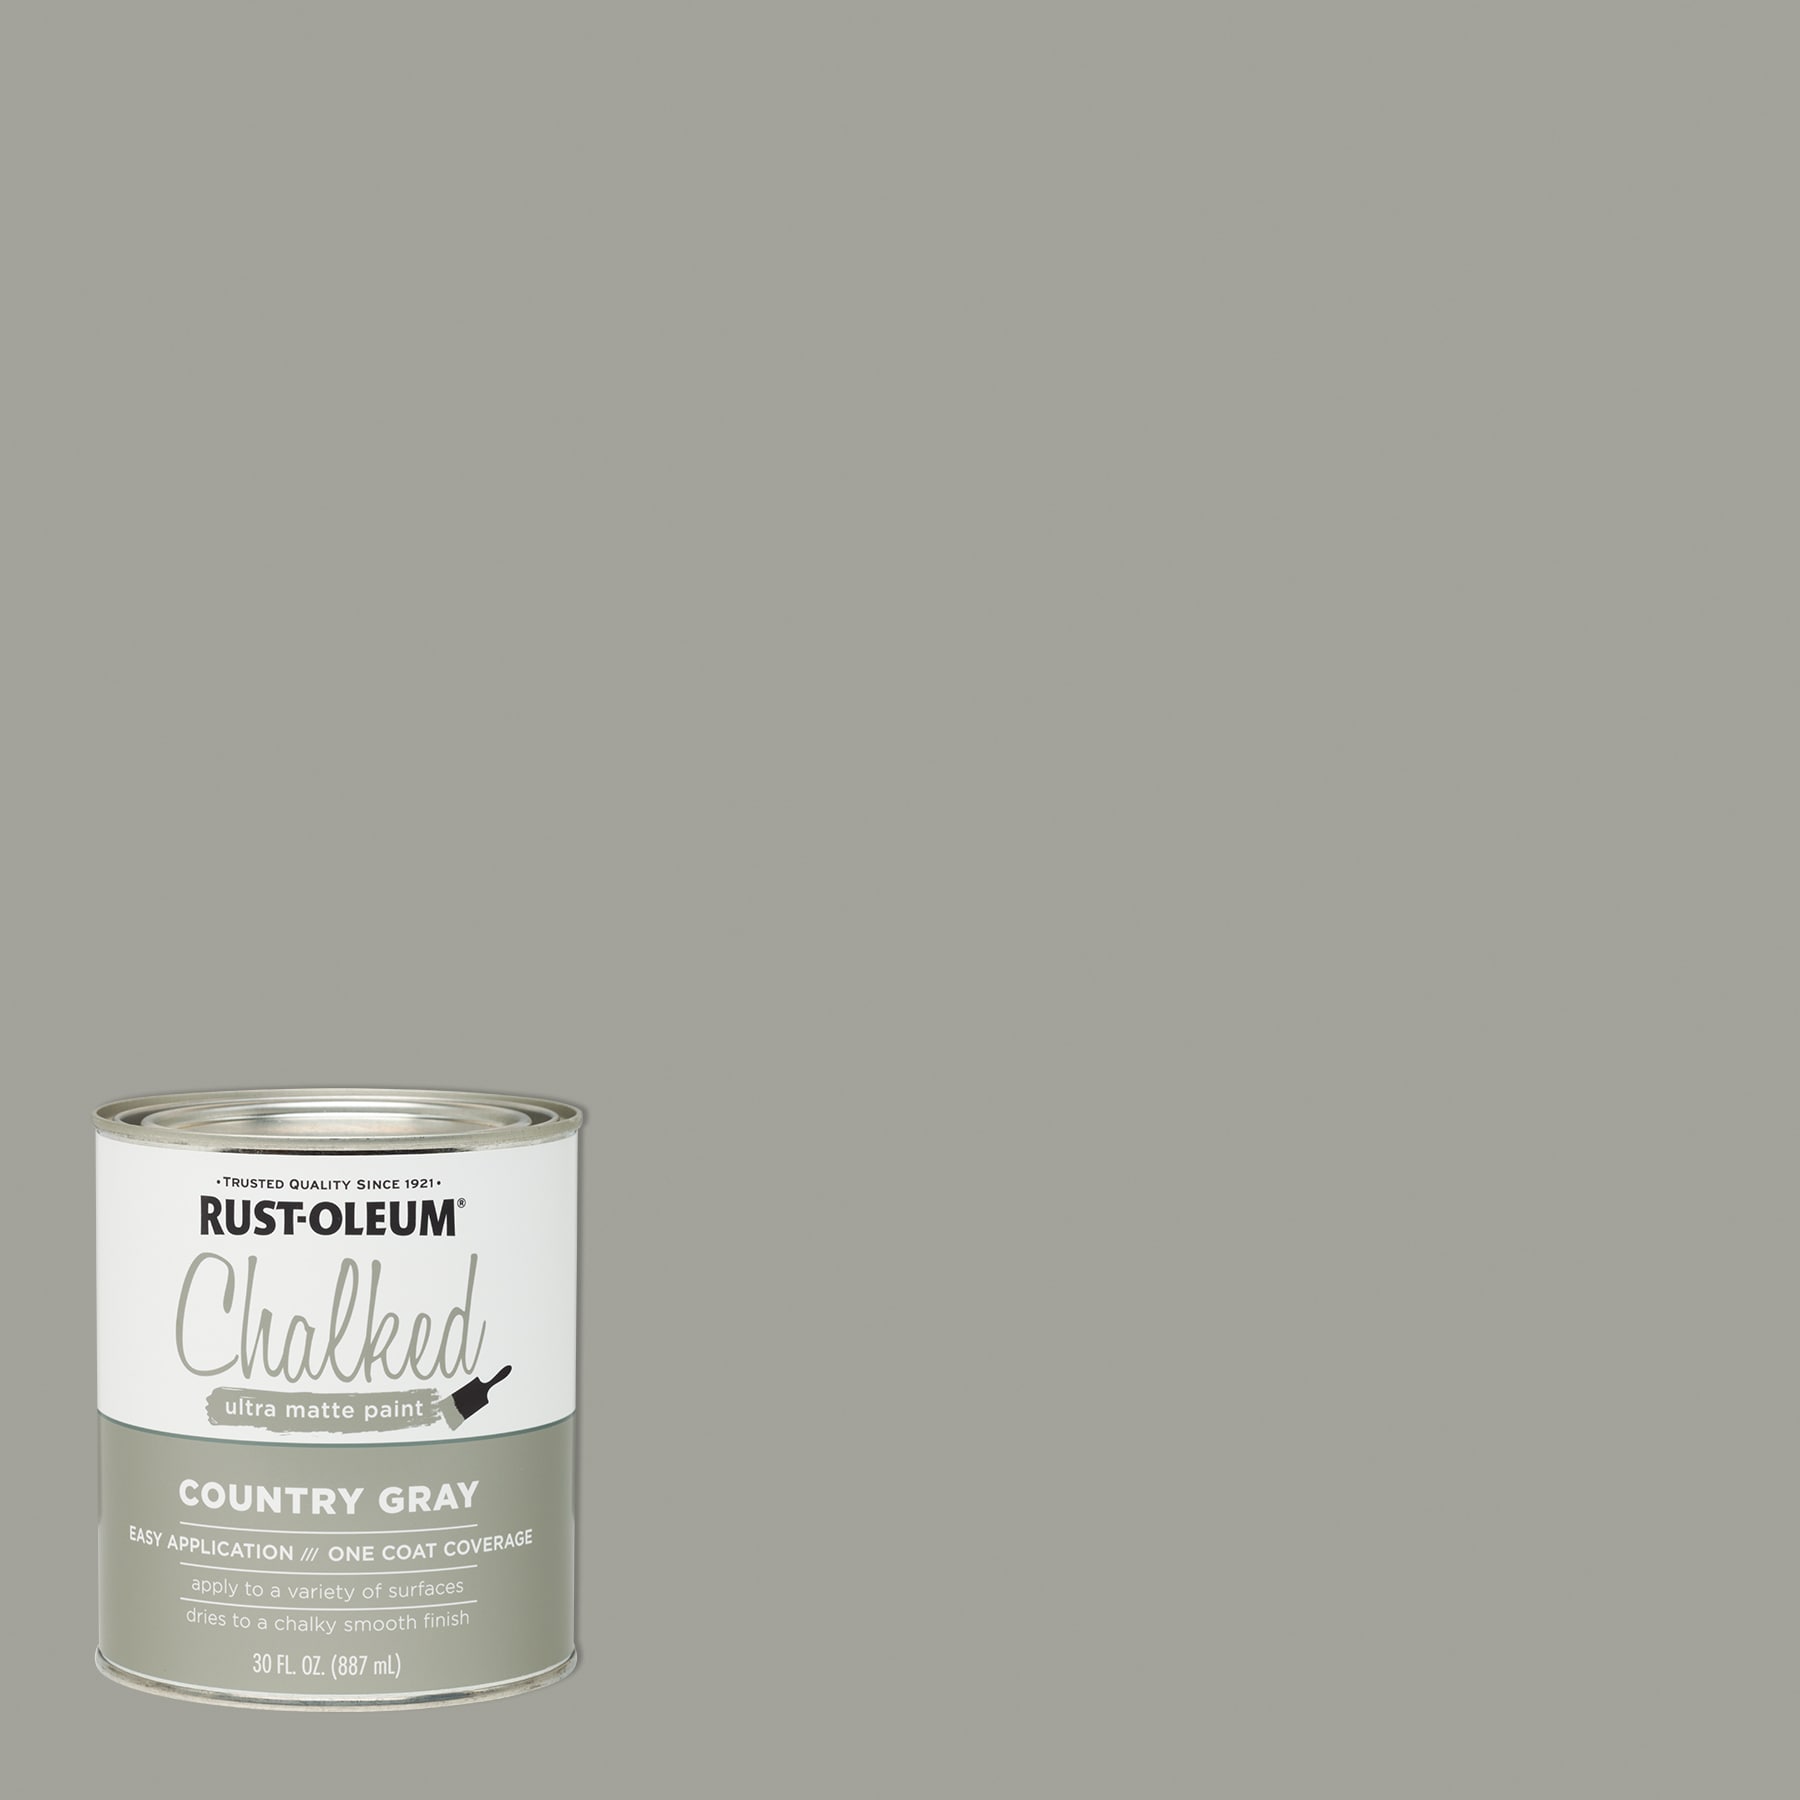 Rust-Oleum Specialty Hi-Gloss White Dry Erase Paint Kit 16 oz - Ace Hardware